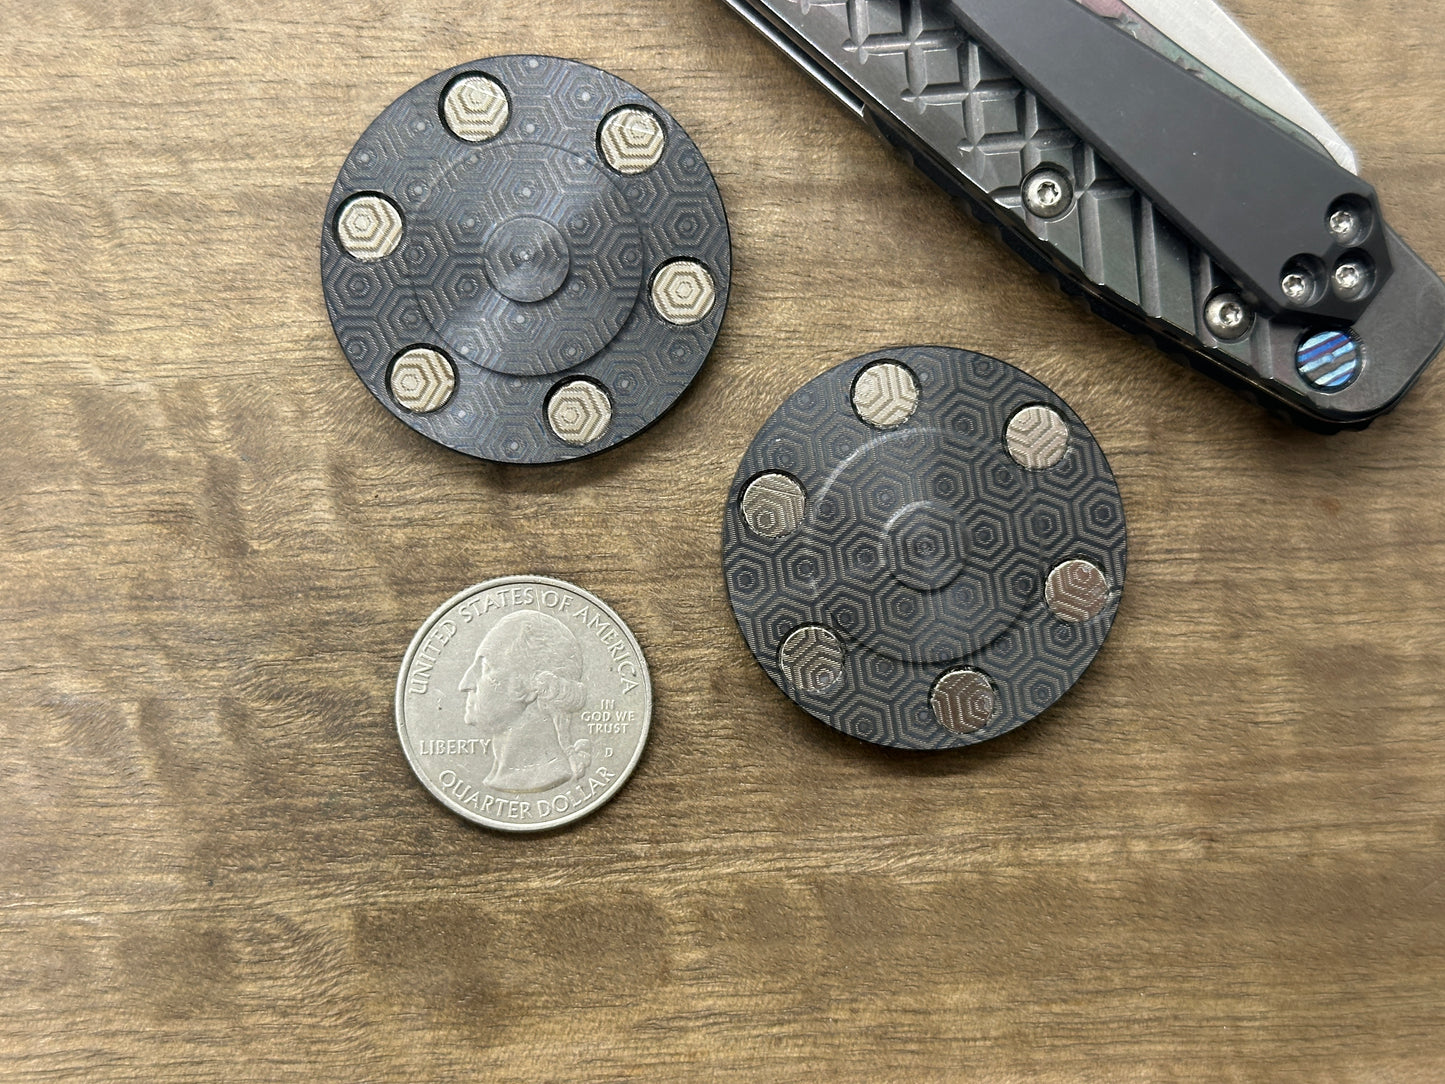 Smiley - Sad engraved Black Zirconium CLICKY HAPTIC Coins Fidget